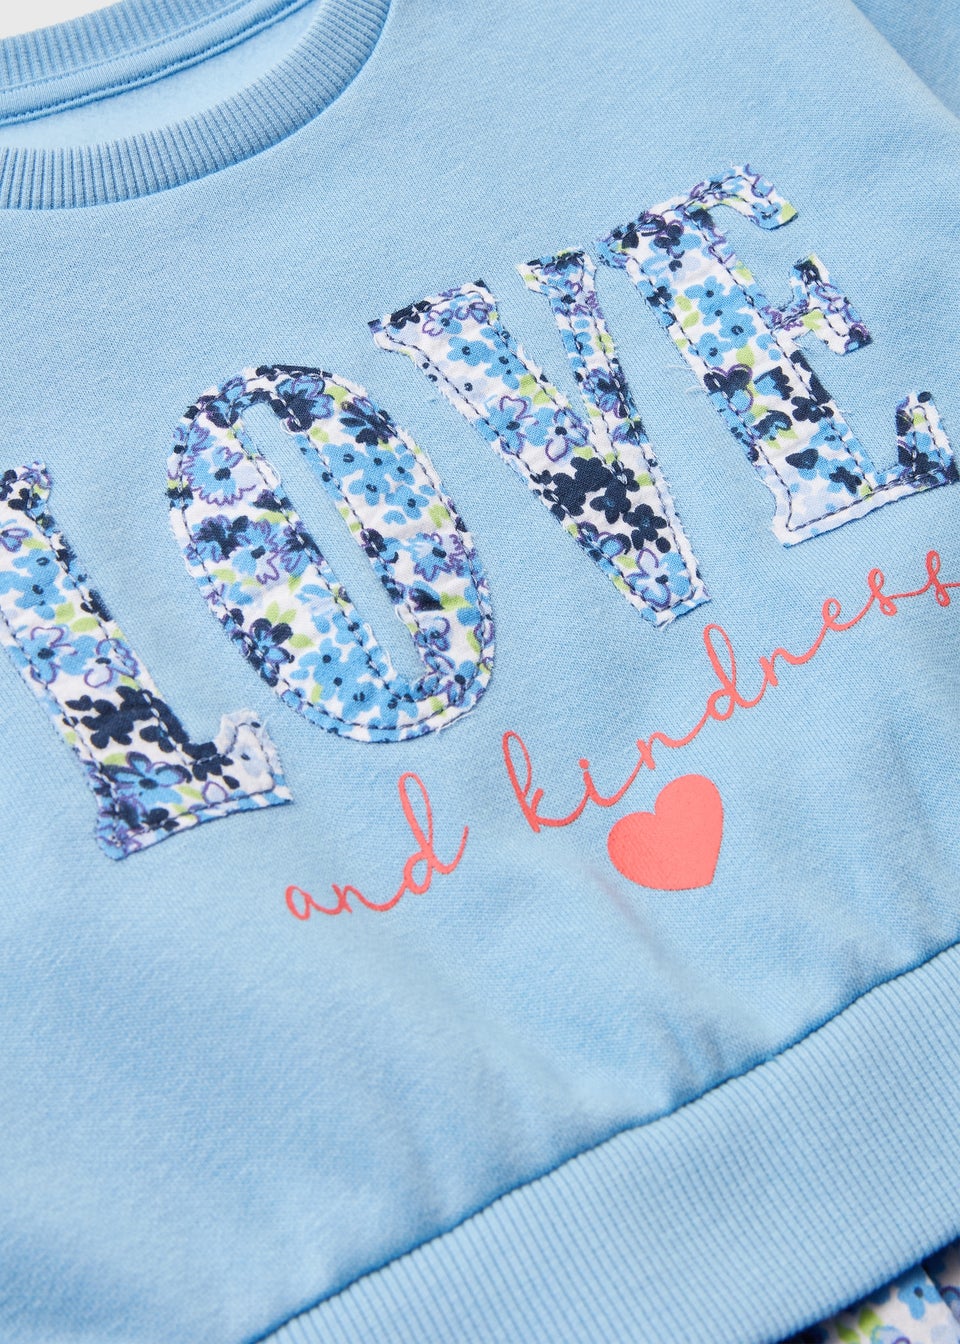 Girls Blue Love & Kindness Sweatshirt Dress (1-7yrs)